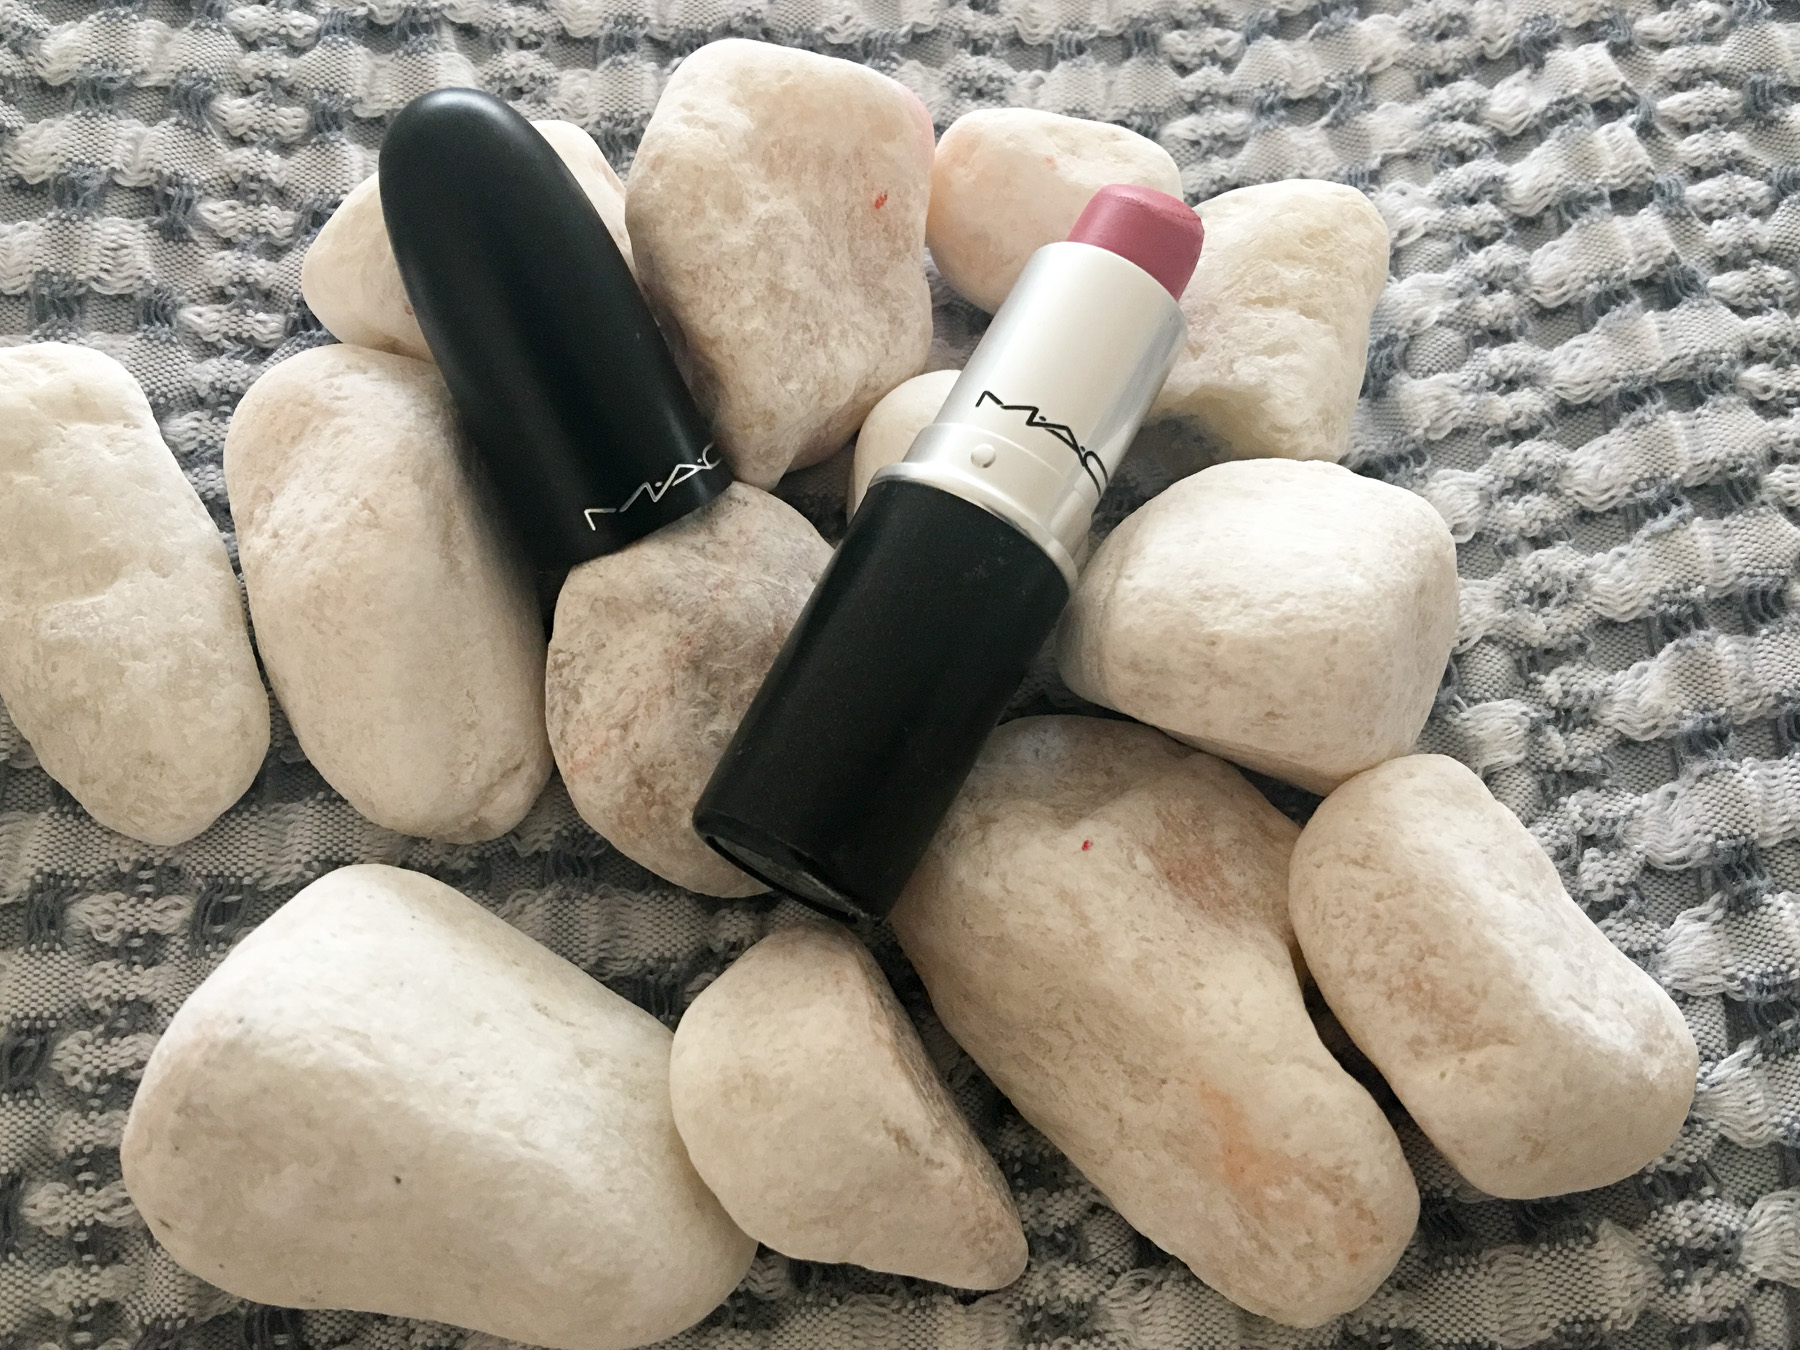 Lipstick-Mac-Please-me-on-rocks.jpg